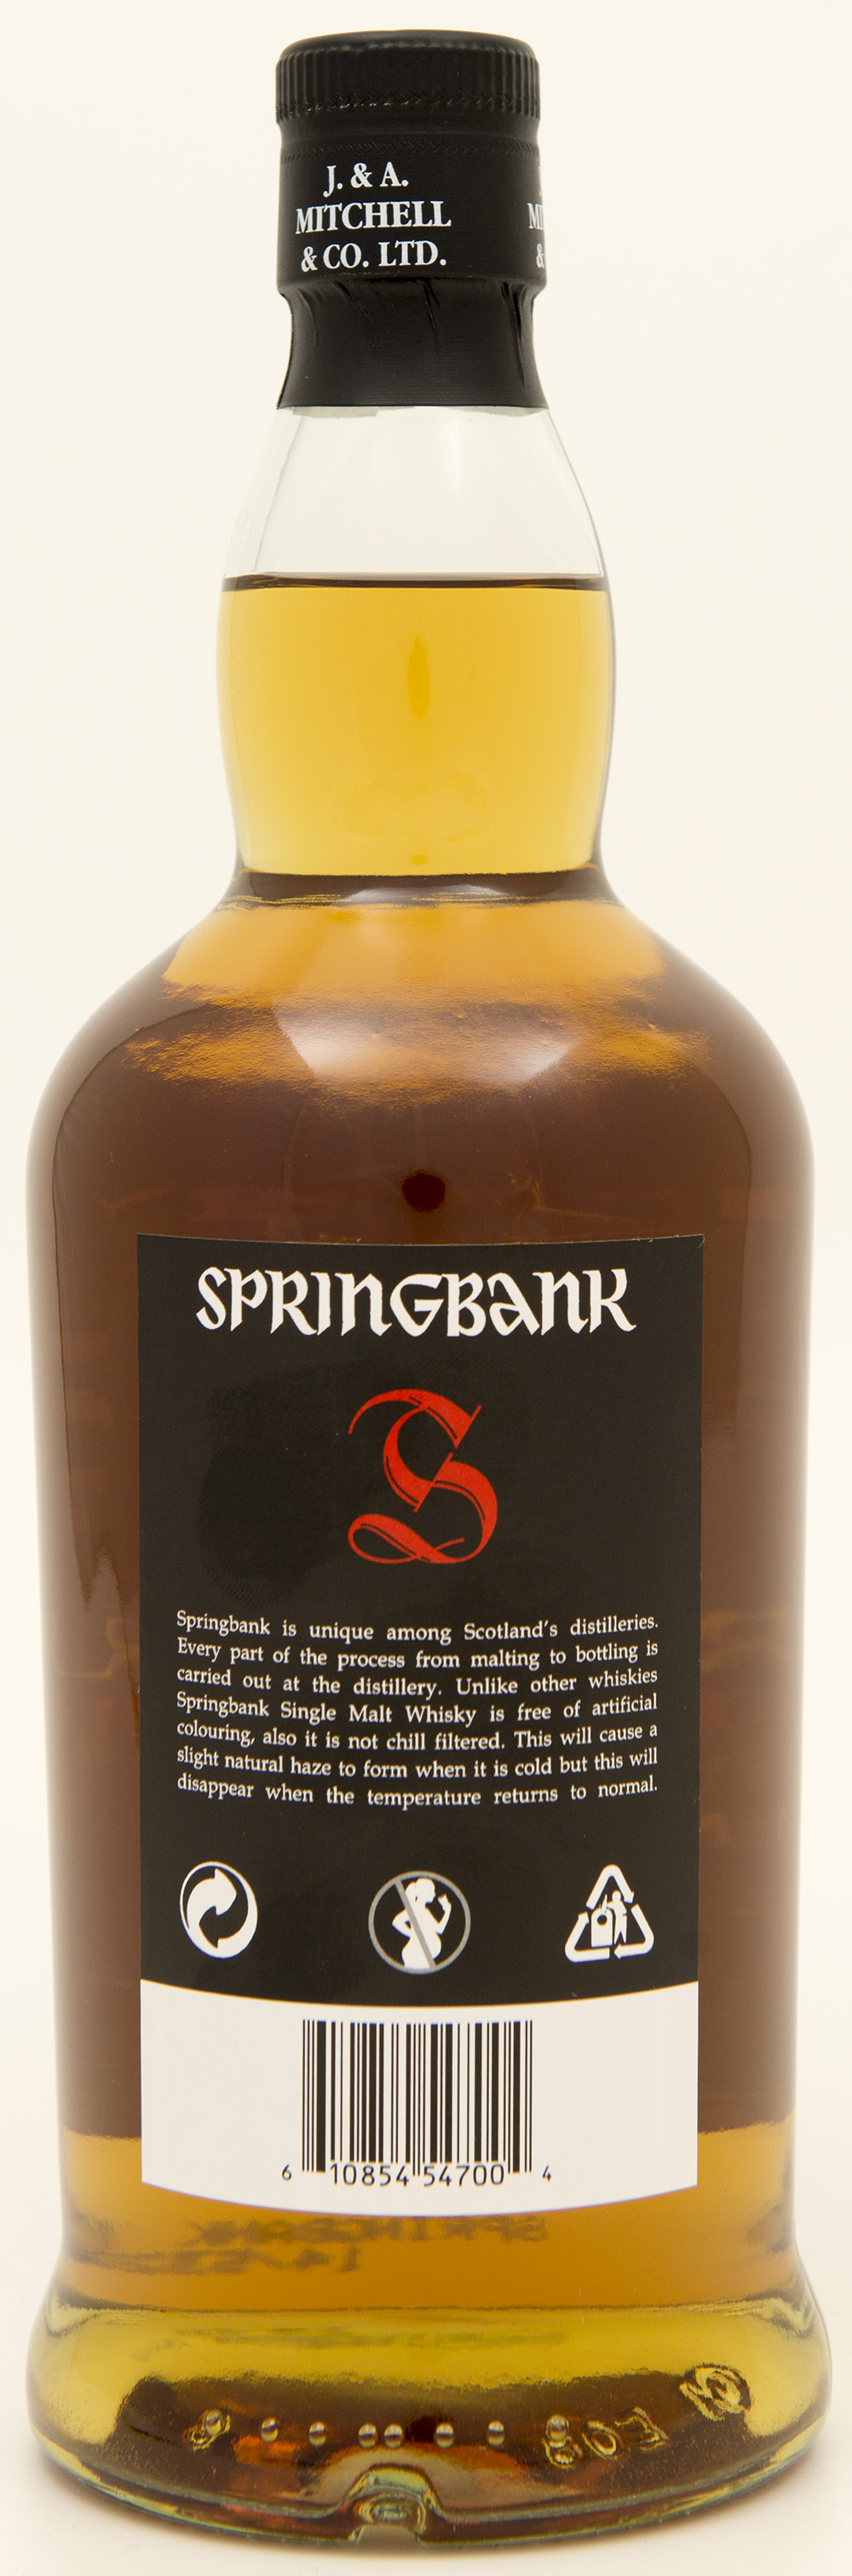 Billede: DSC_1393 - Springbank 12 cask strength - bottle back.jpg